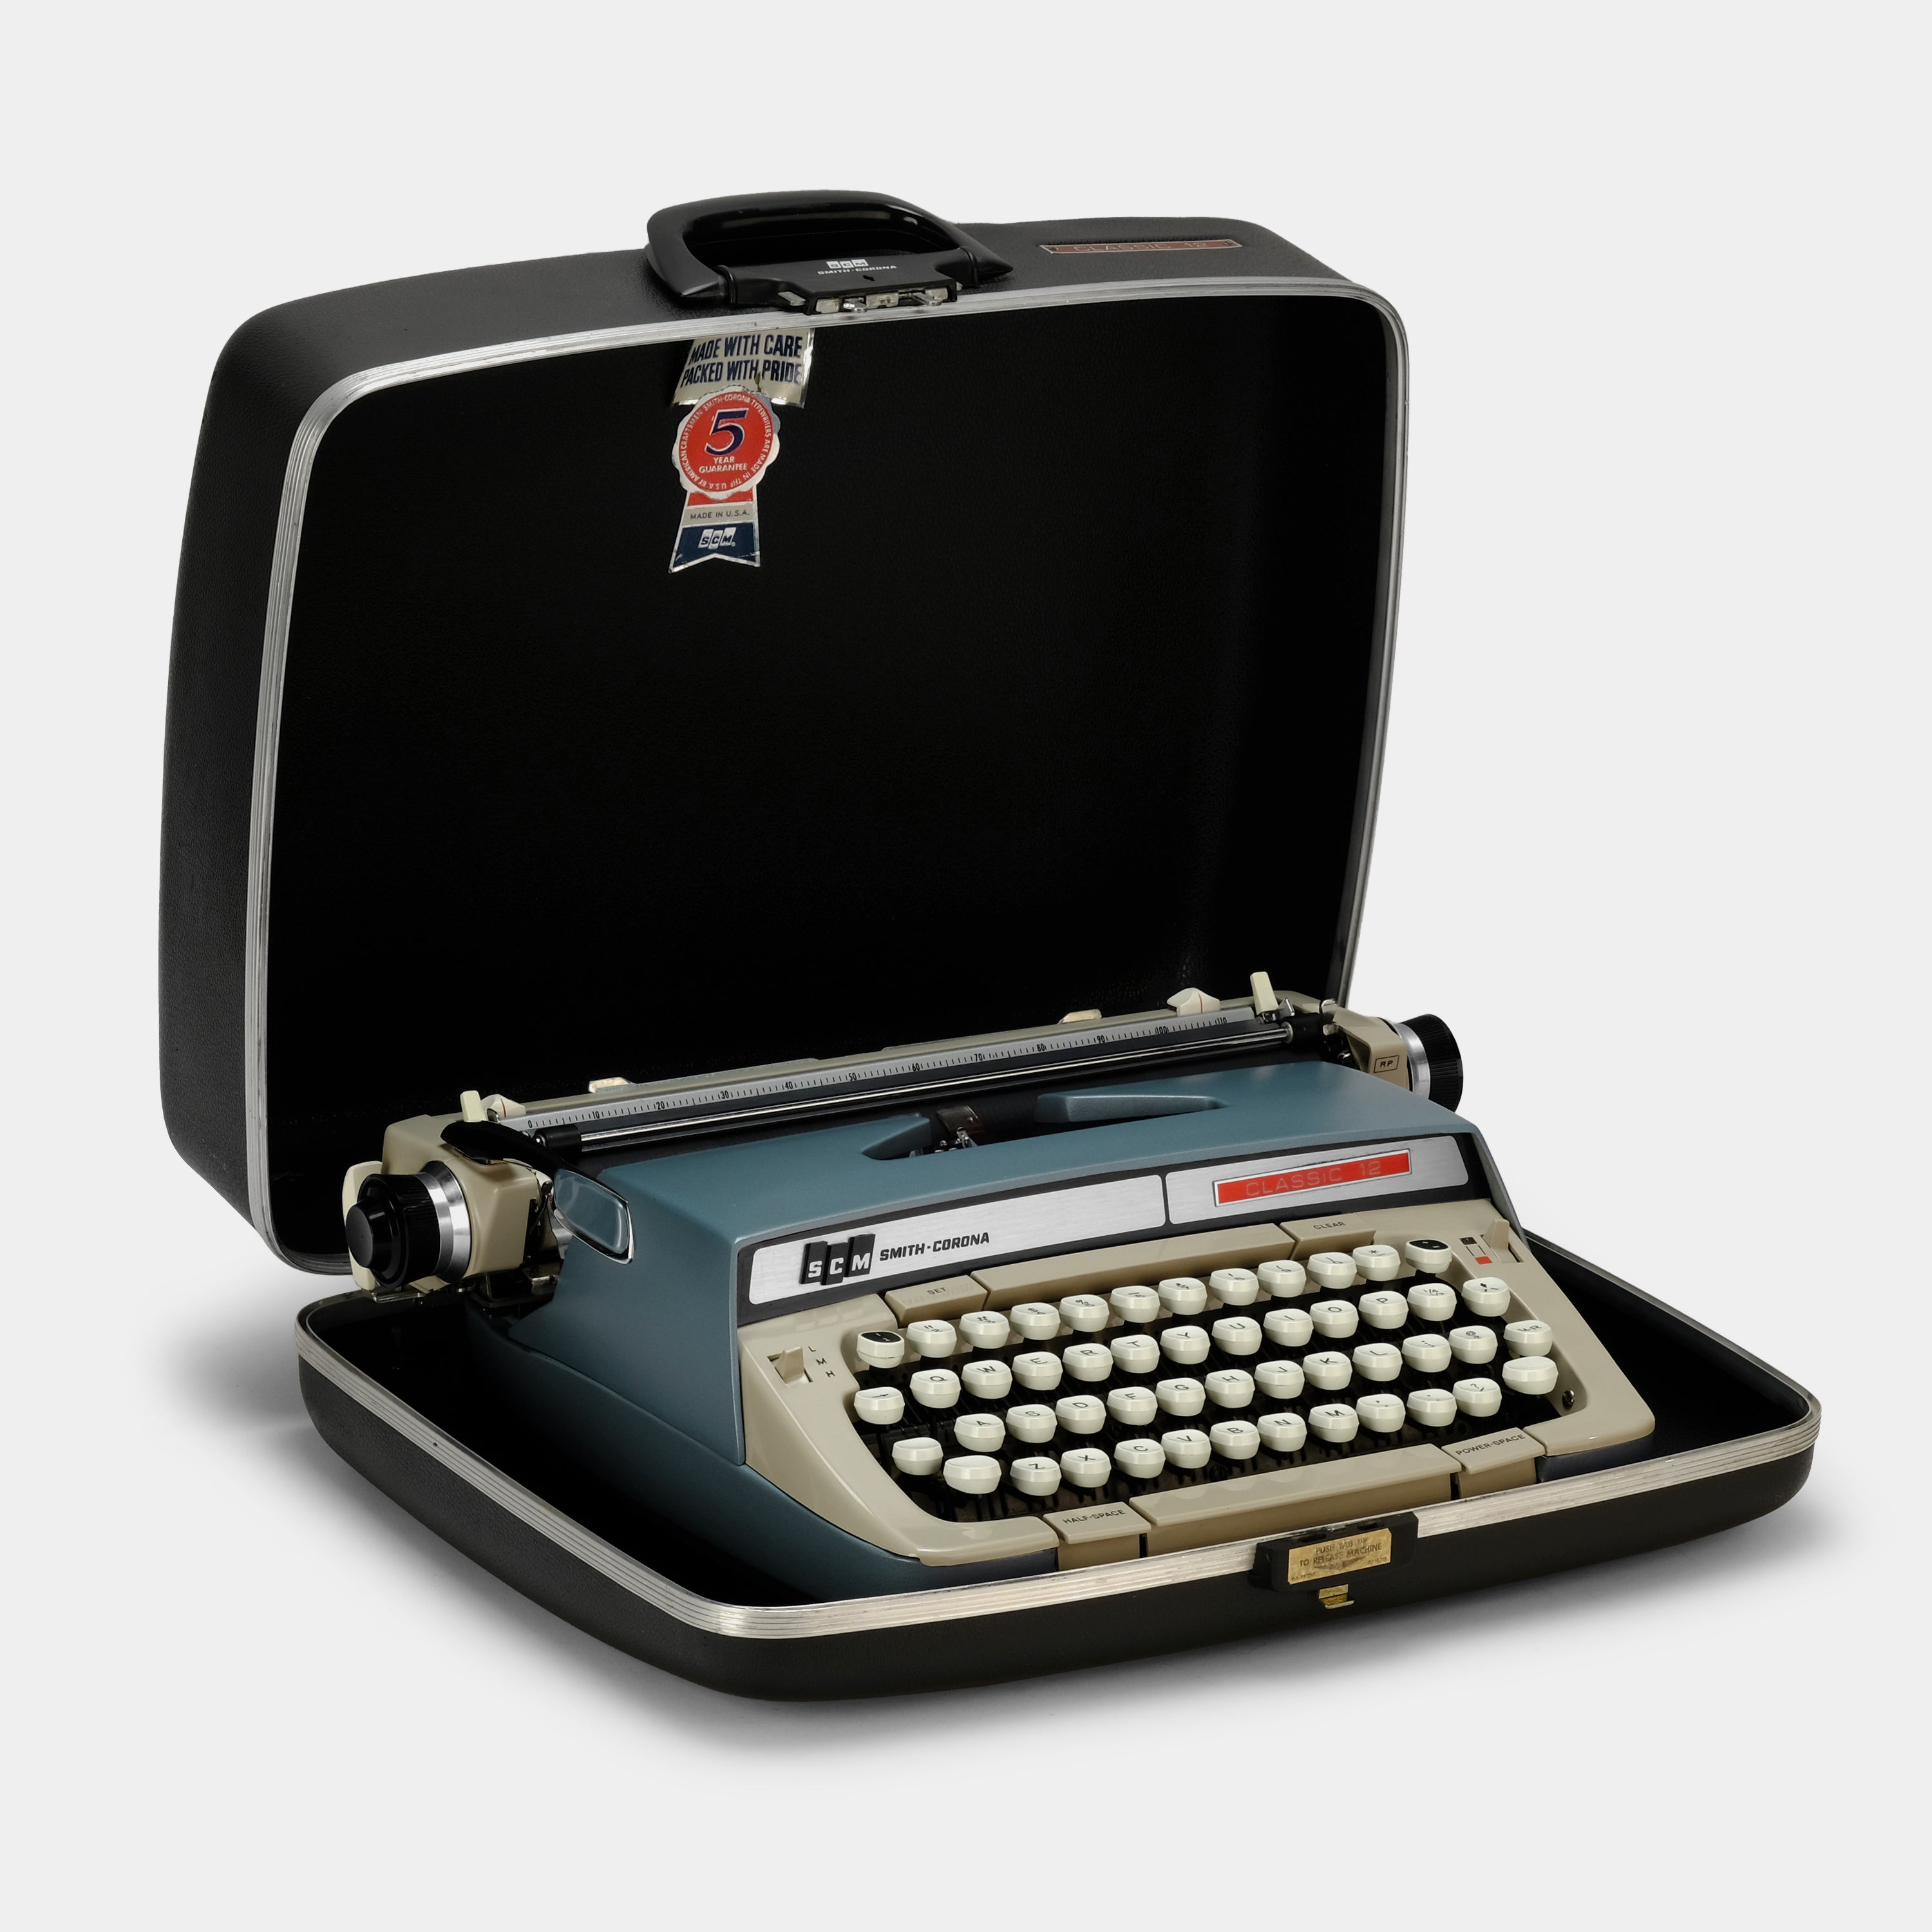 Smith-Corona Classic 12 Blue Manual Typewriter